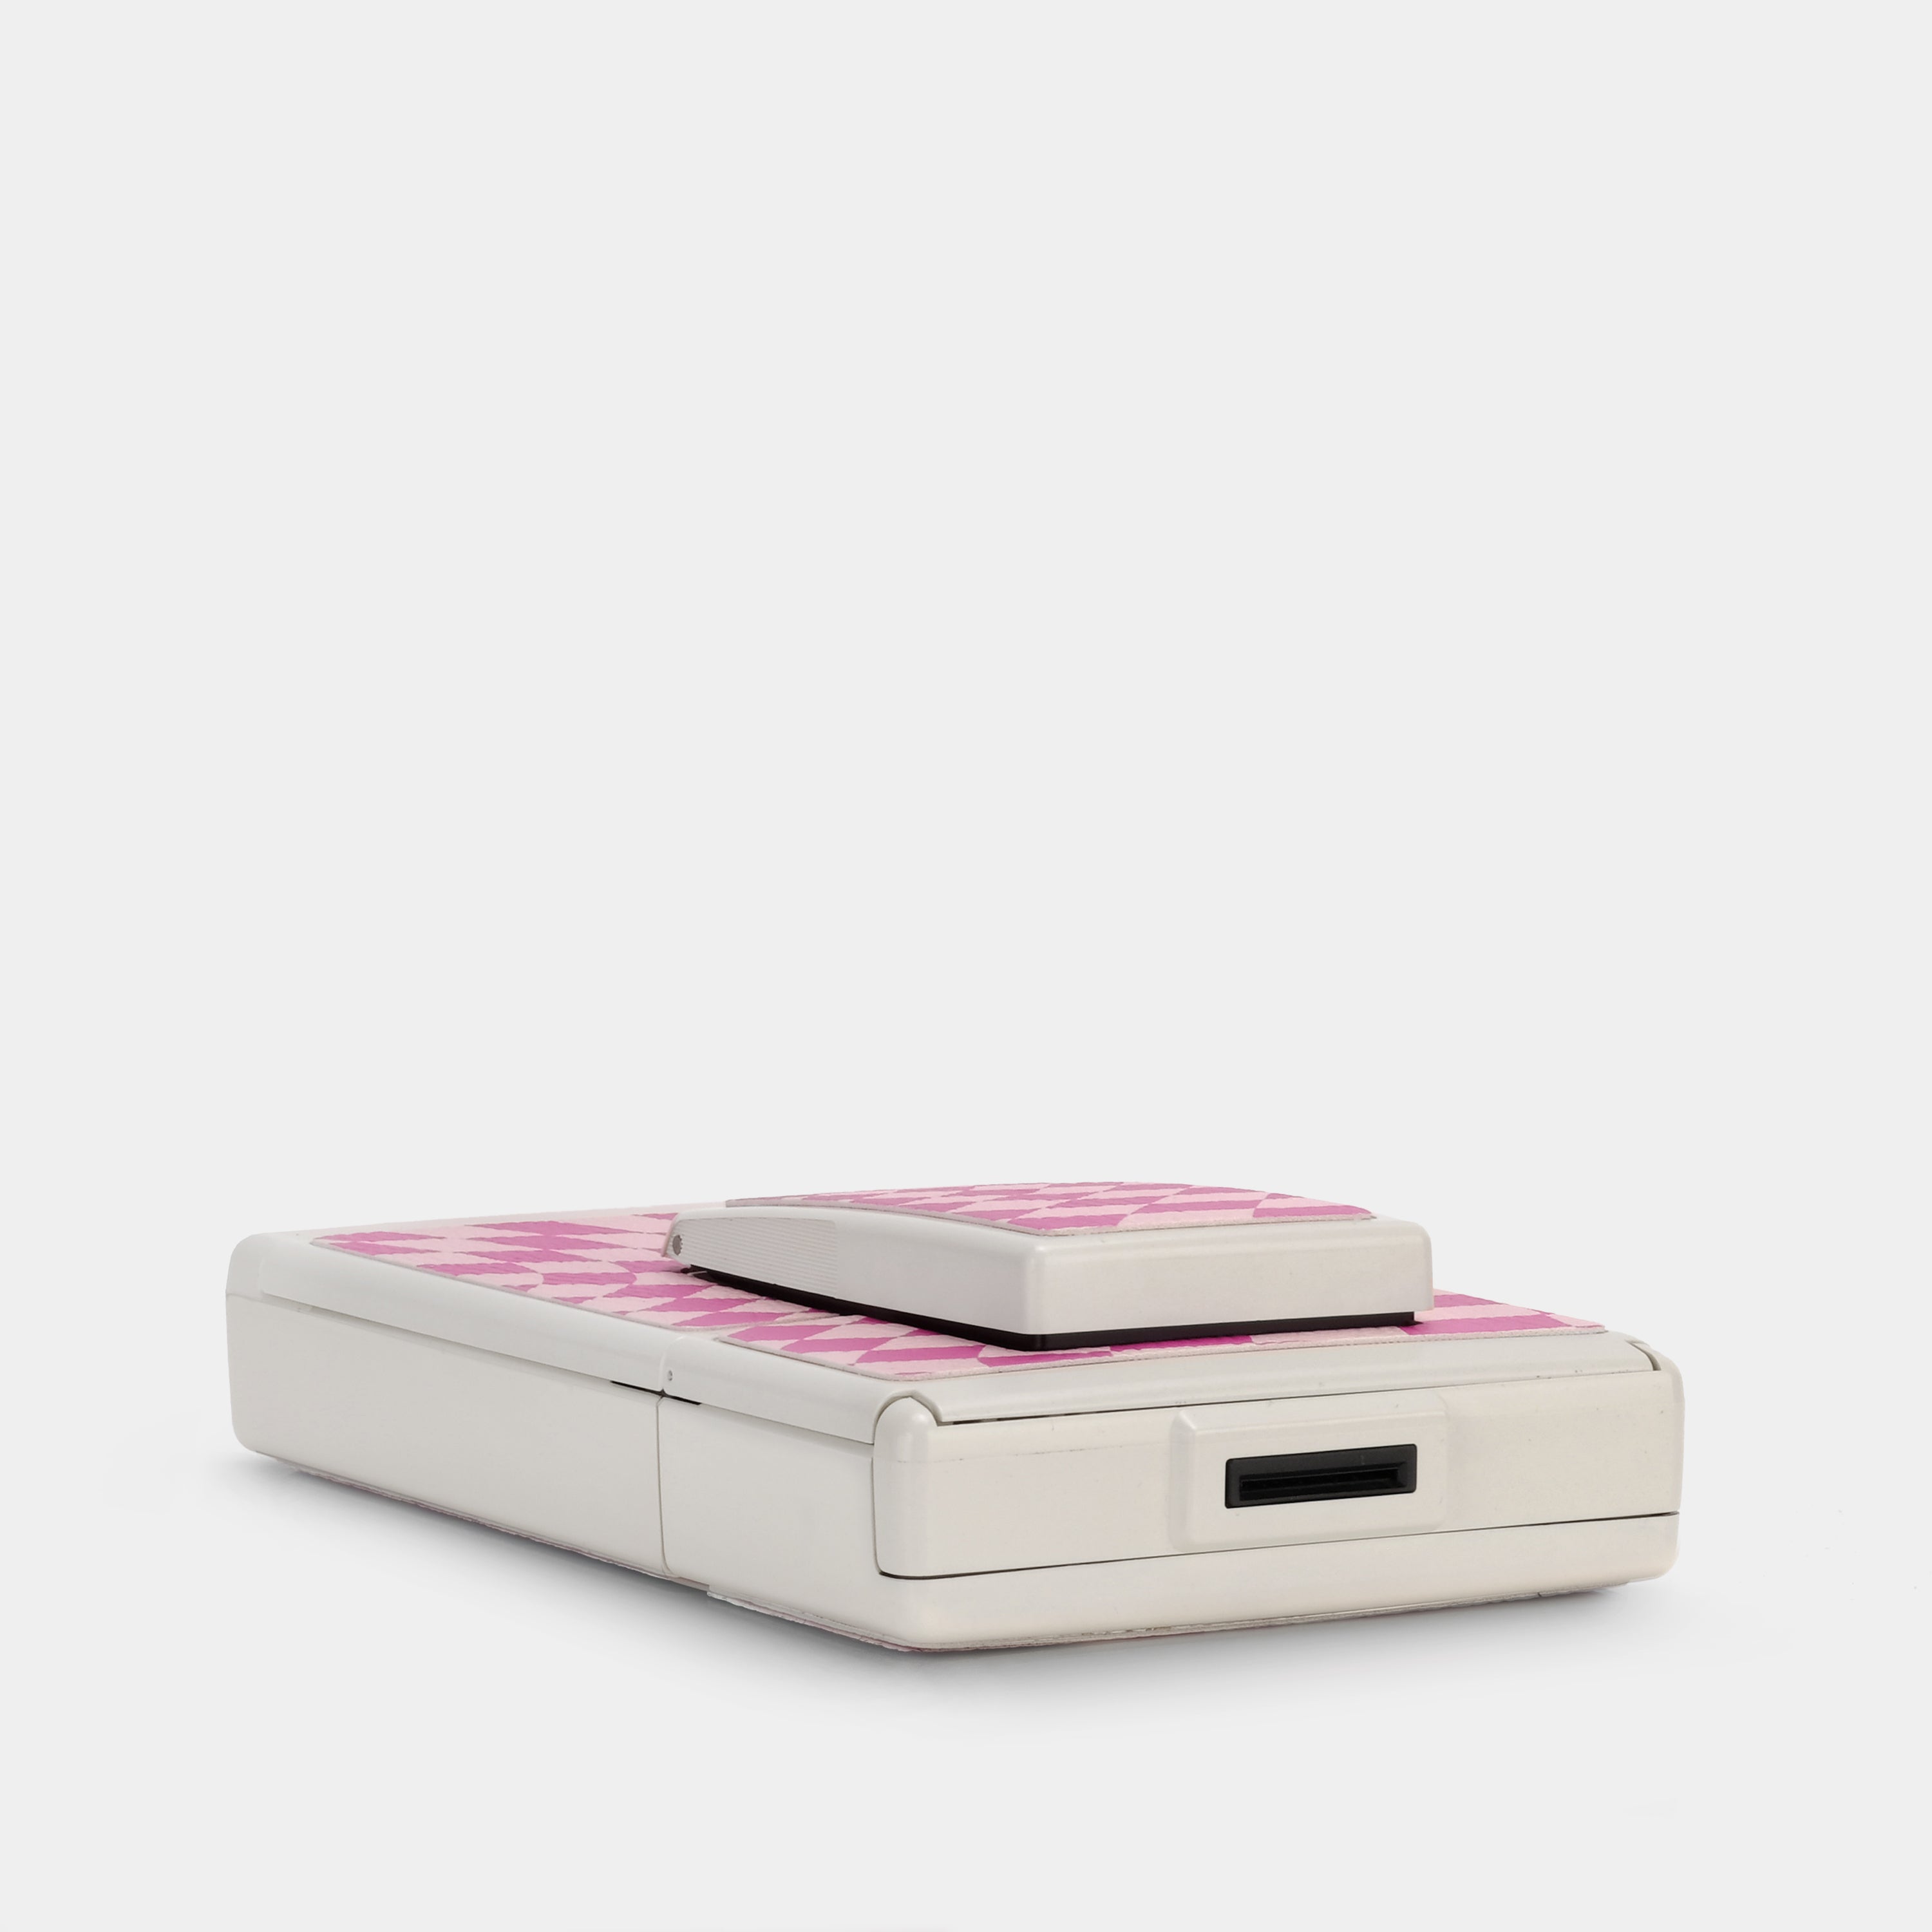 Polaroid SX-70 Model 2 Fuchsia and Pink Wave Check White Folding Instant Film Camera